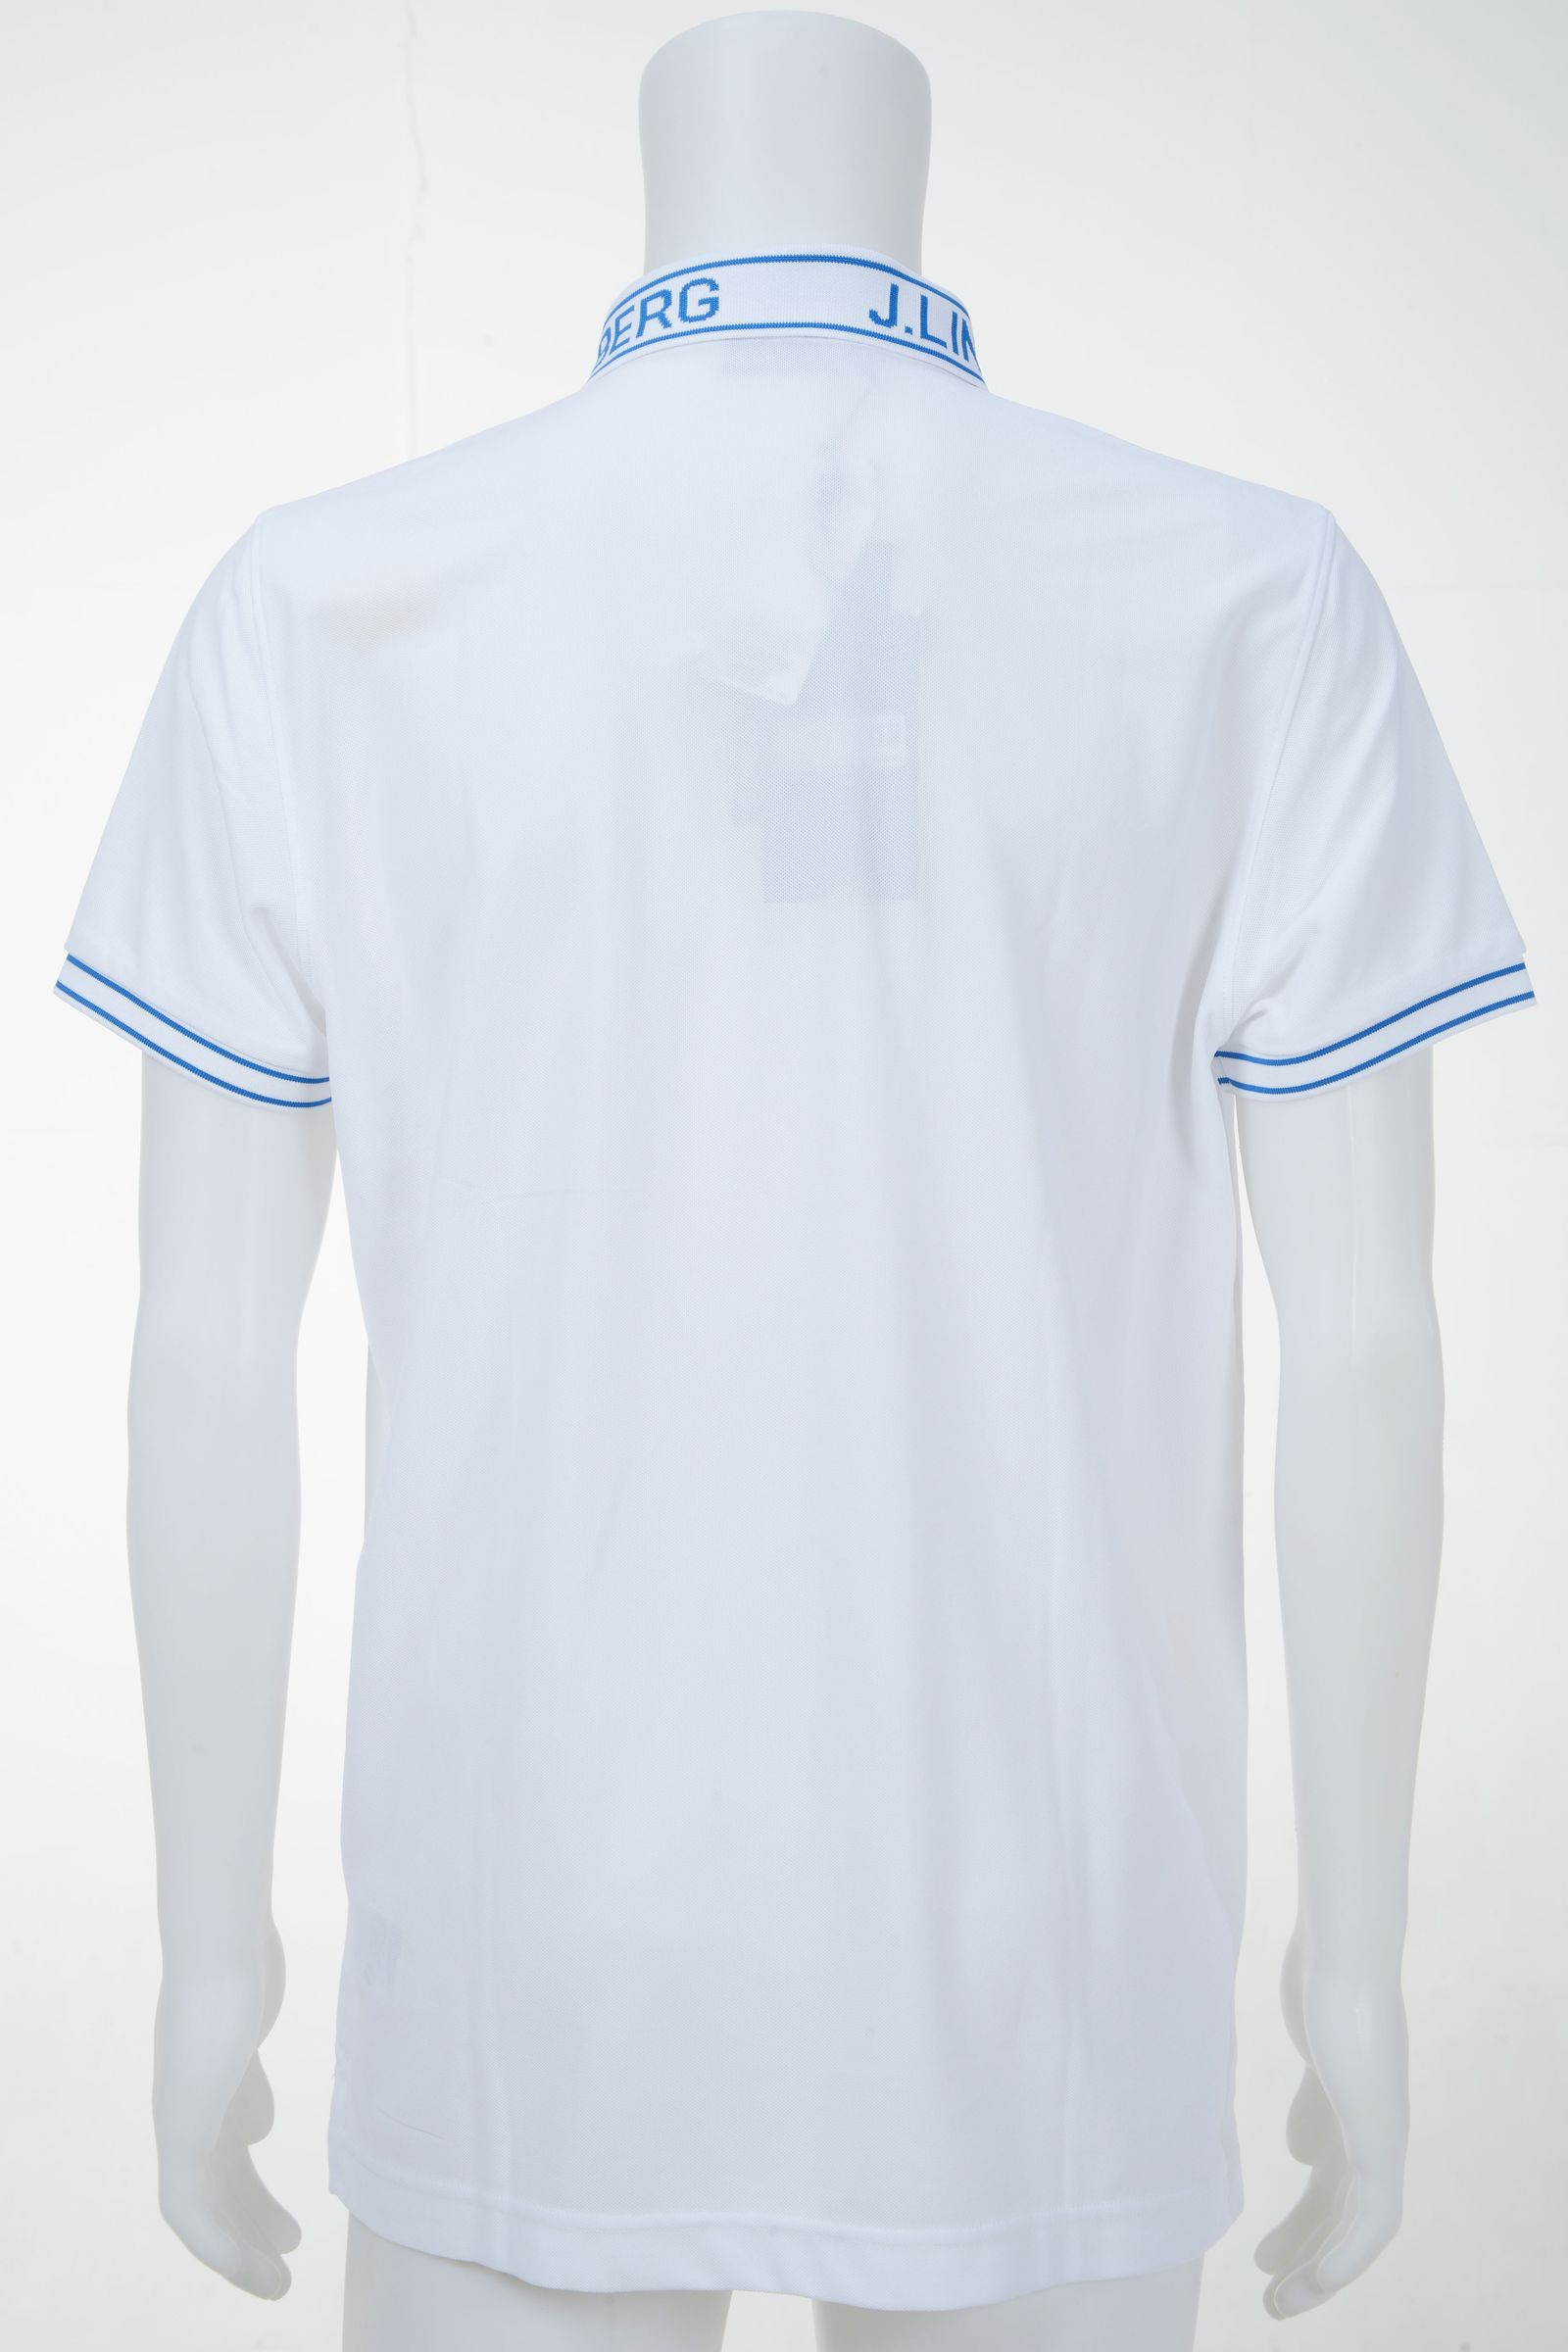 J.LINDEBERG - ゴルフウェア | 半袖ポロシャツ | リブ襟 | メンズ 